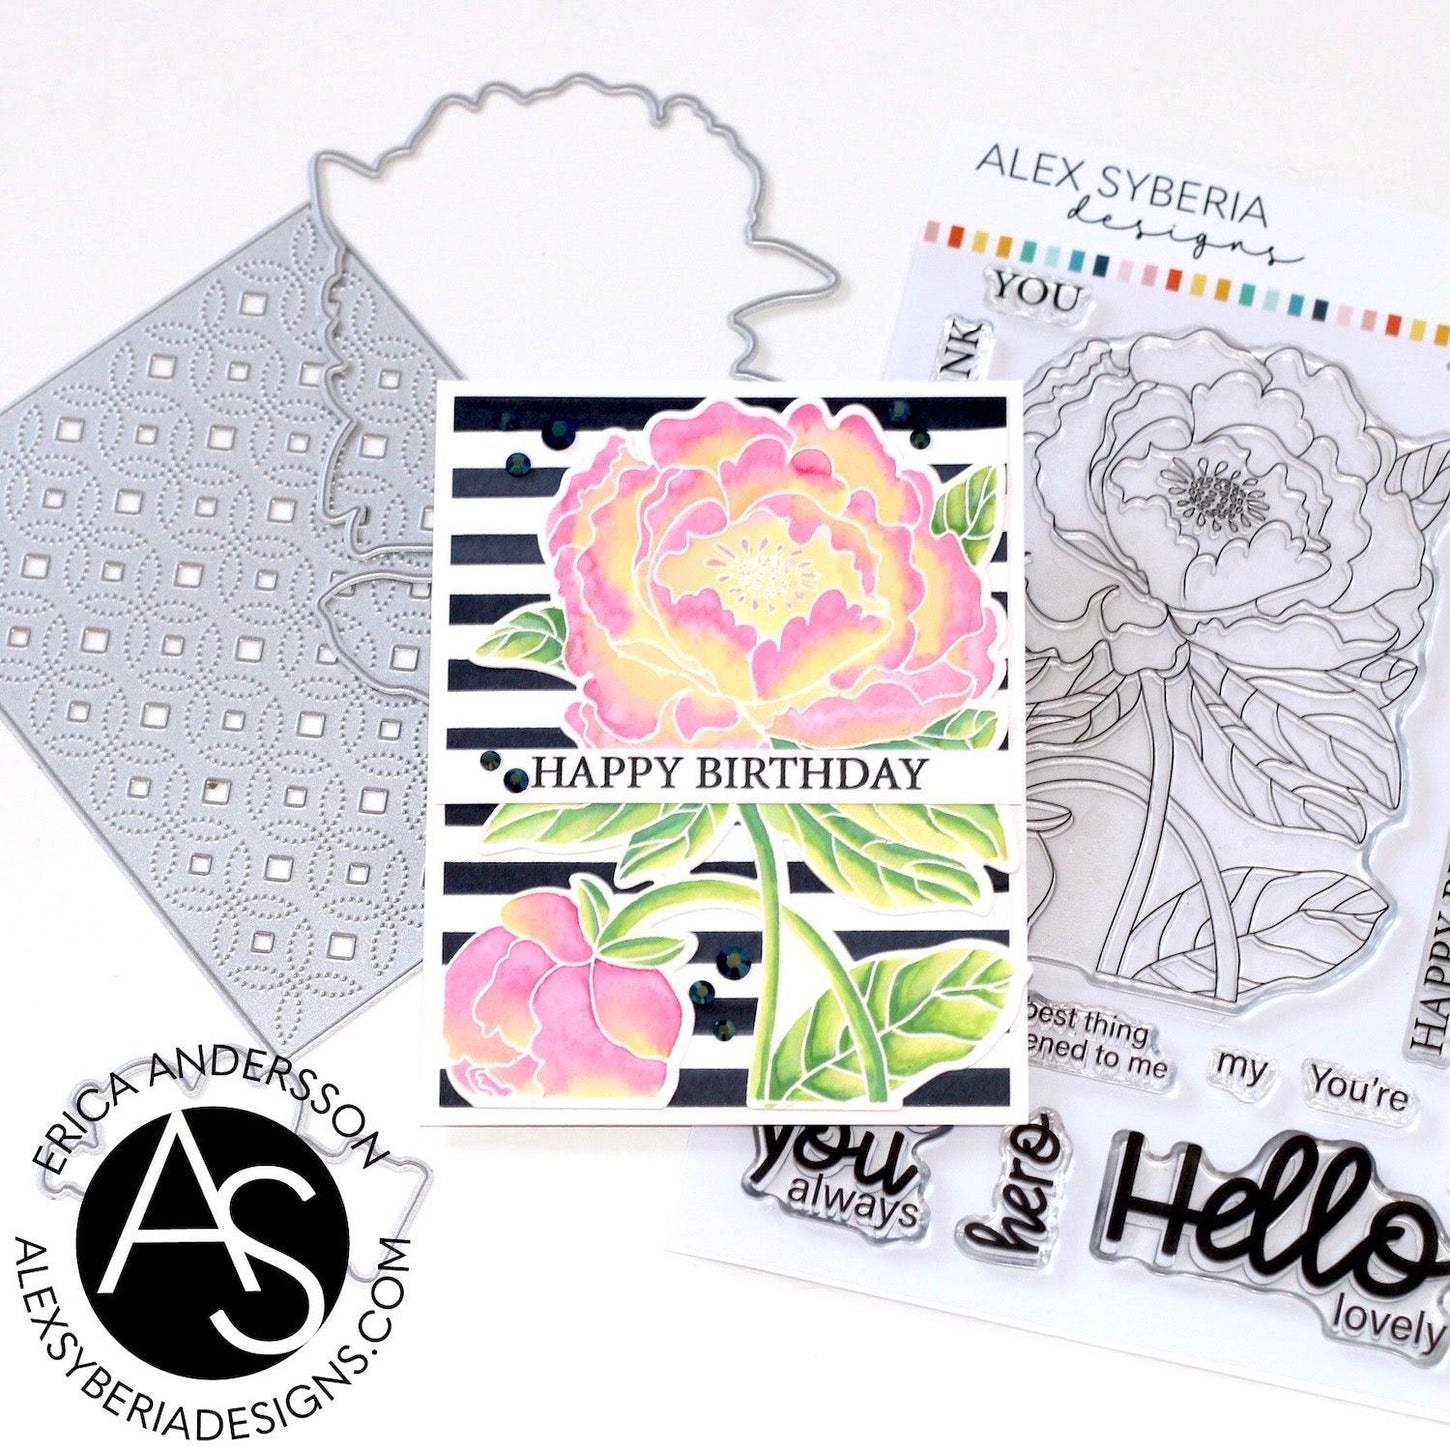 alex-syberia-designs-cardmaking-tutorials-stamps-dies-stencils-smile-die-watercoloring-erica-rainbow-cards